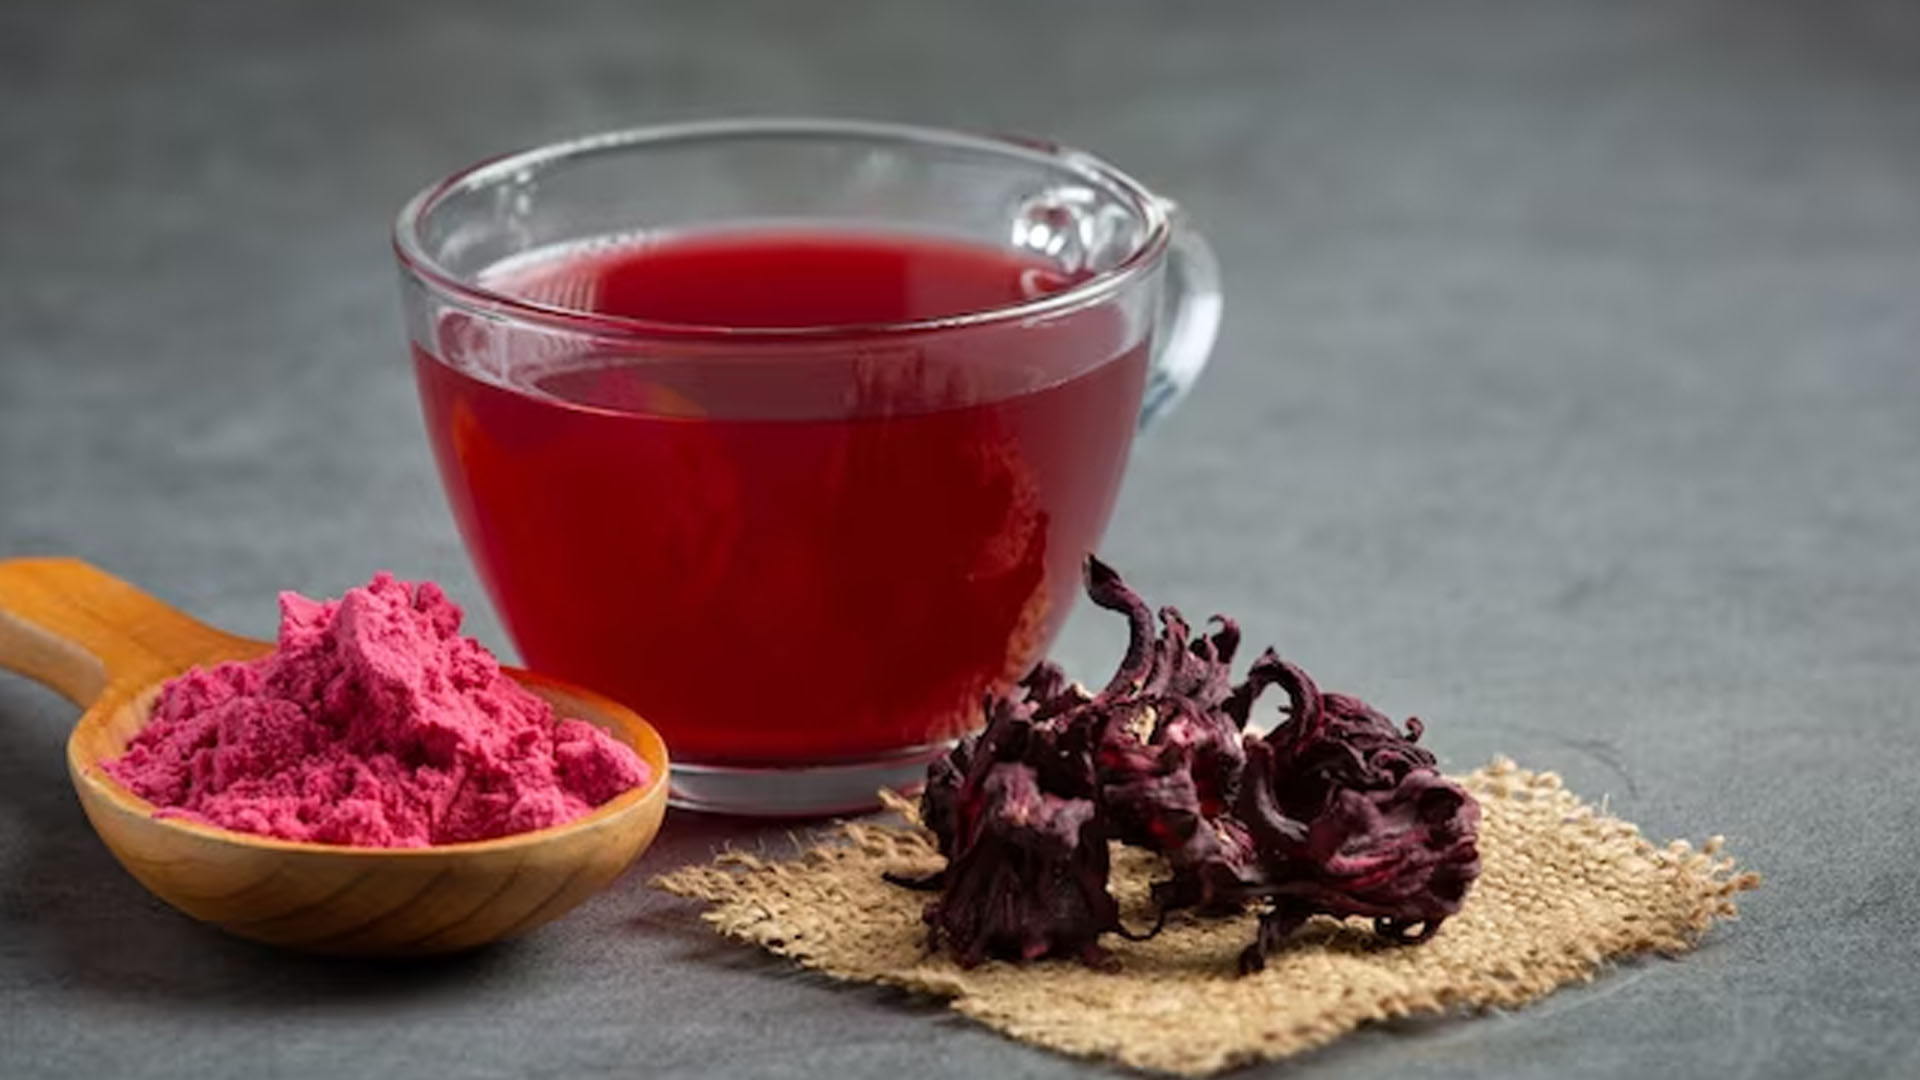 Does Rose Petal Tea Health Benefits?